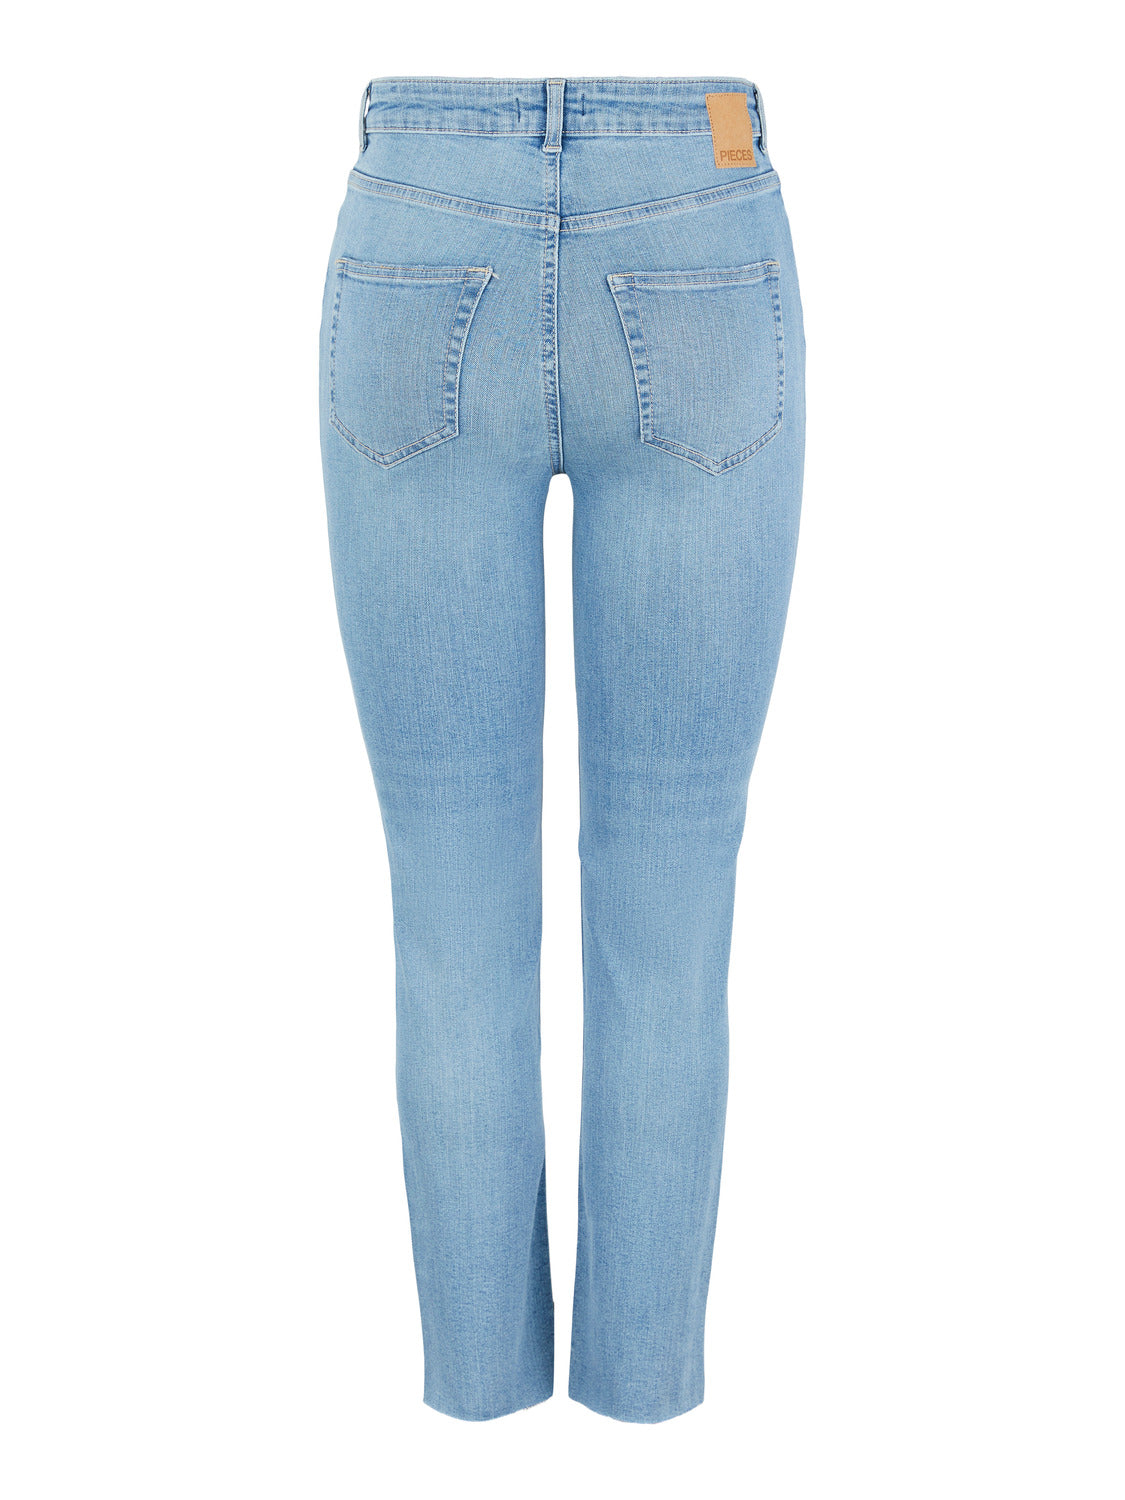 PCDELLY Jeans - Light Blue Denim